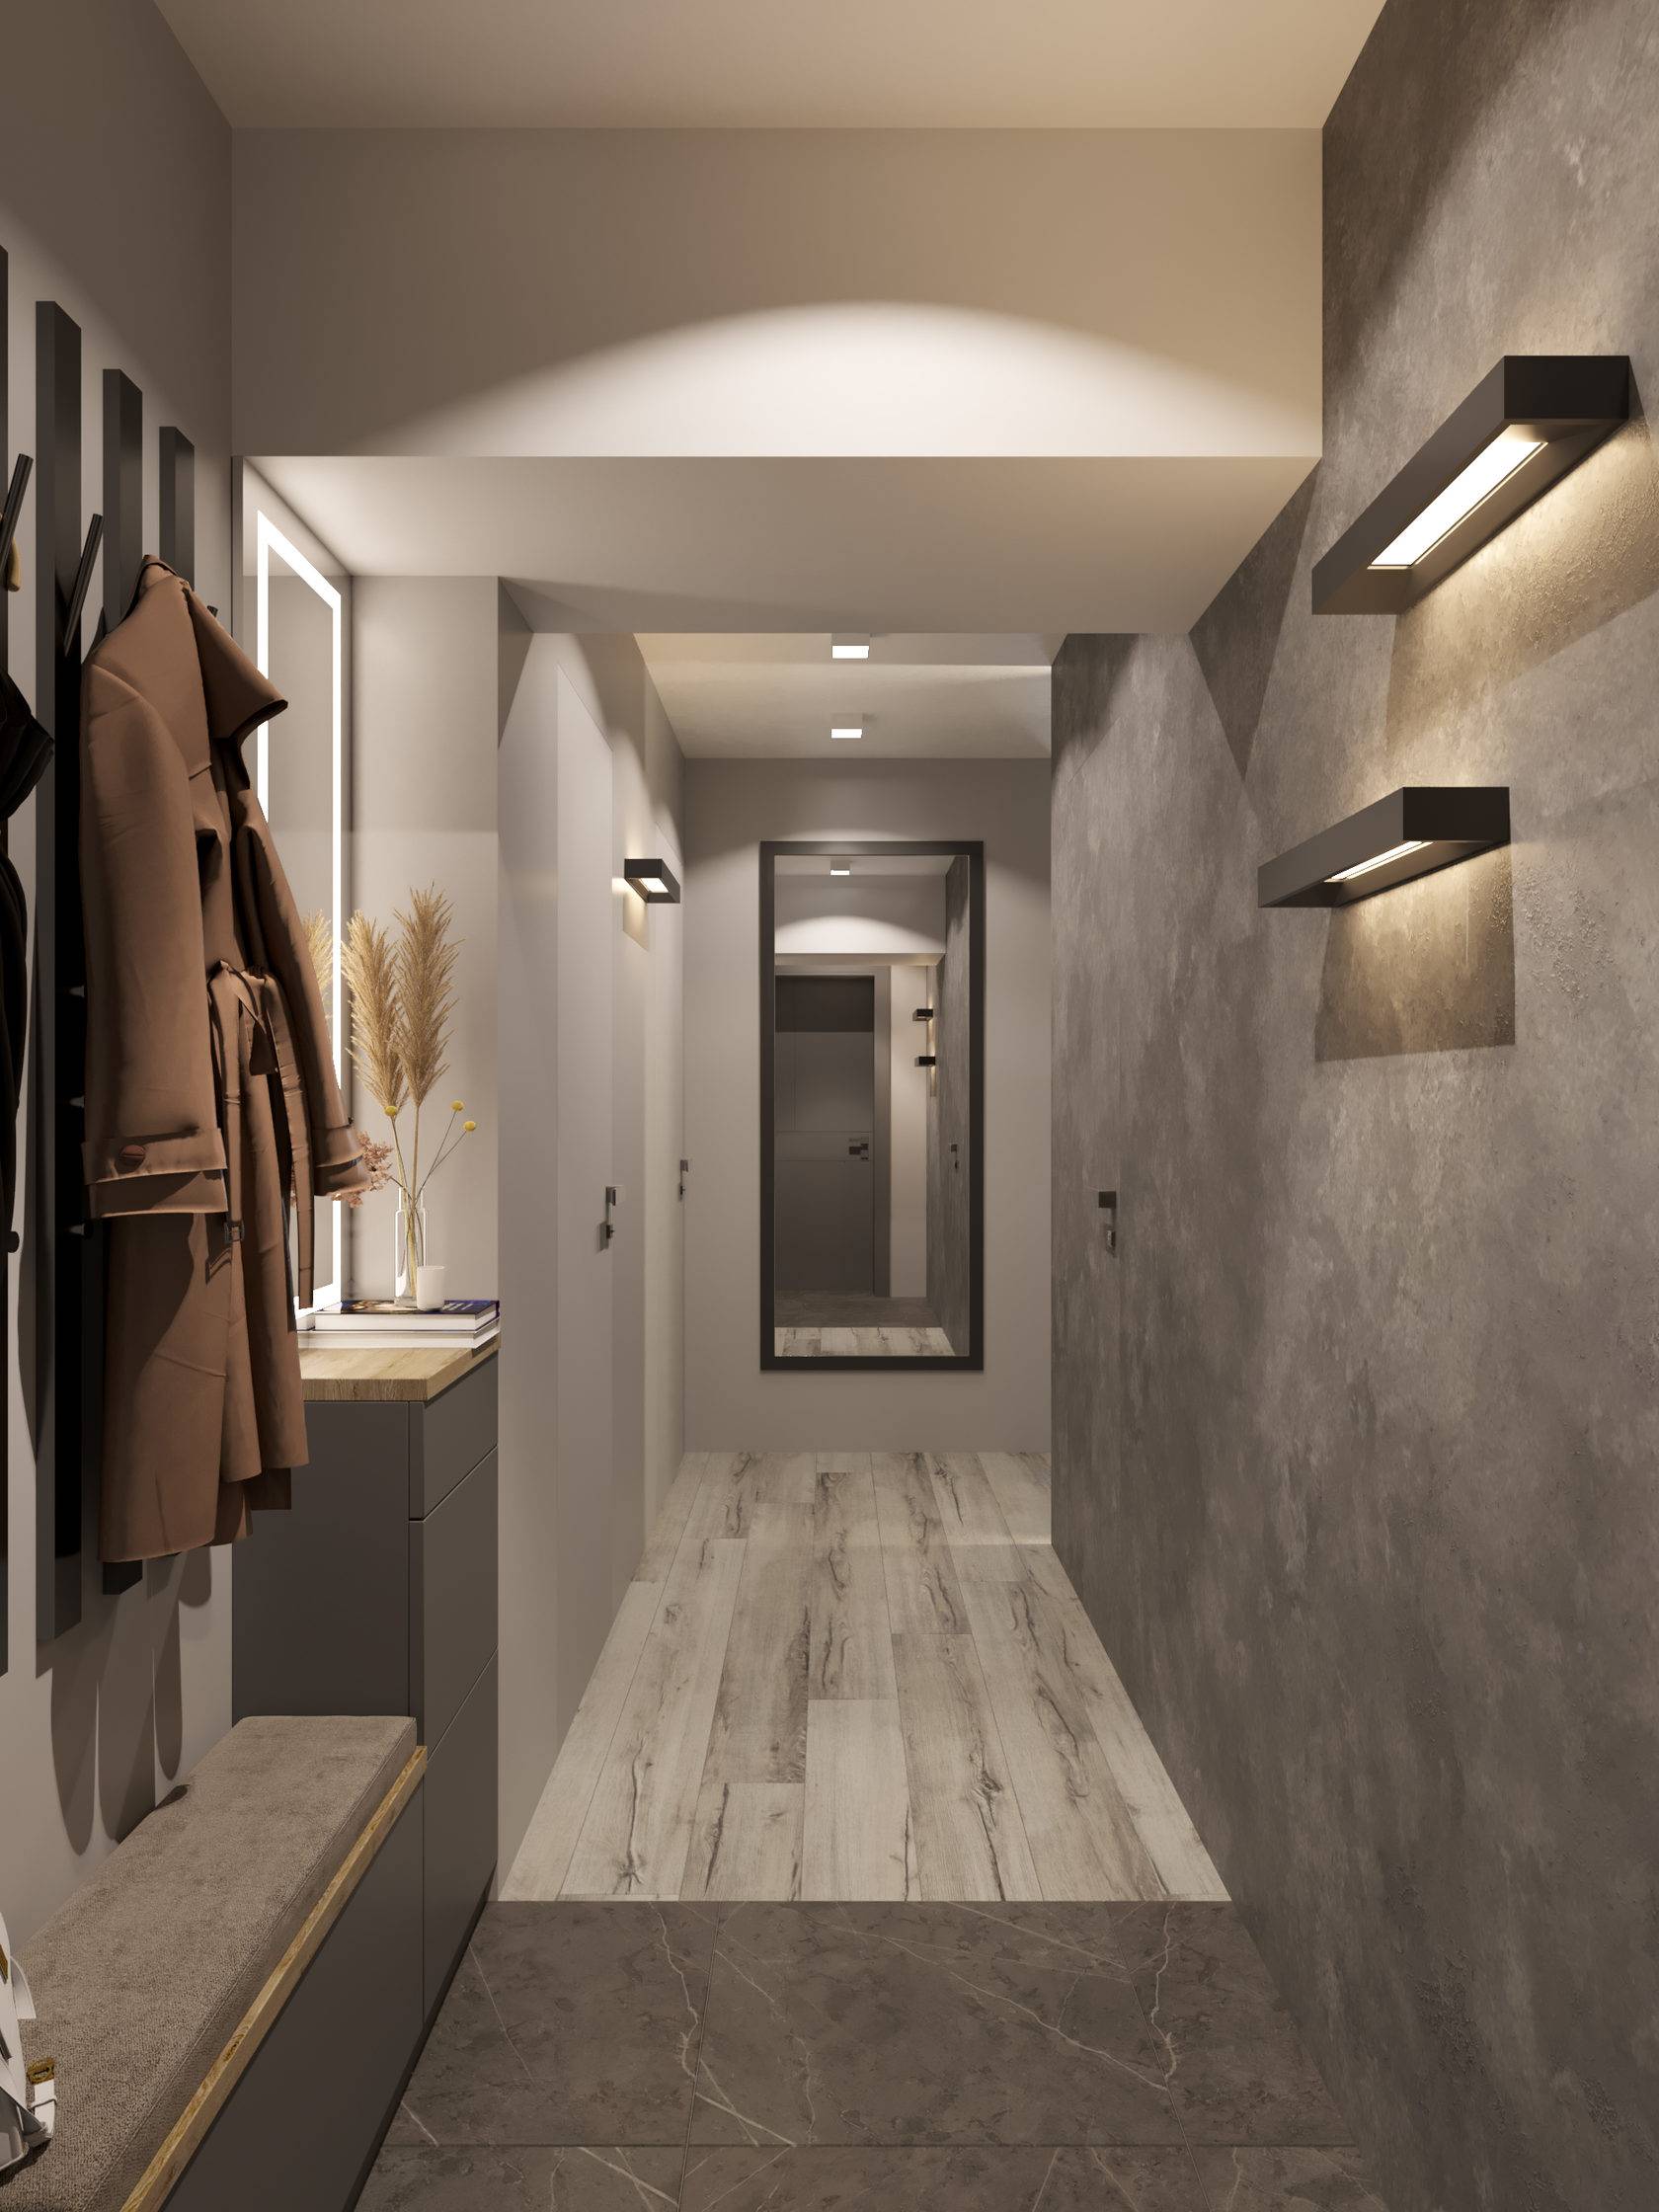 Дизайн коридора в квартире 467 серии. отделка потолка